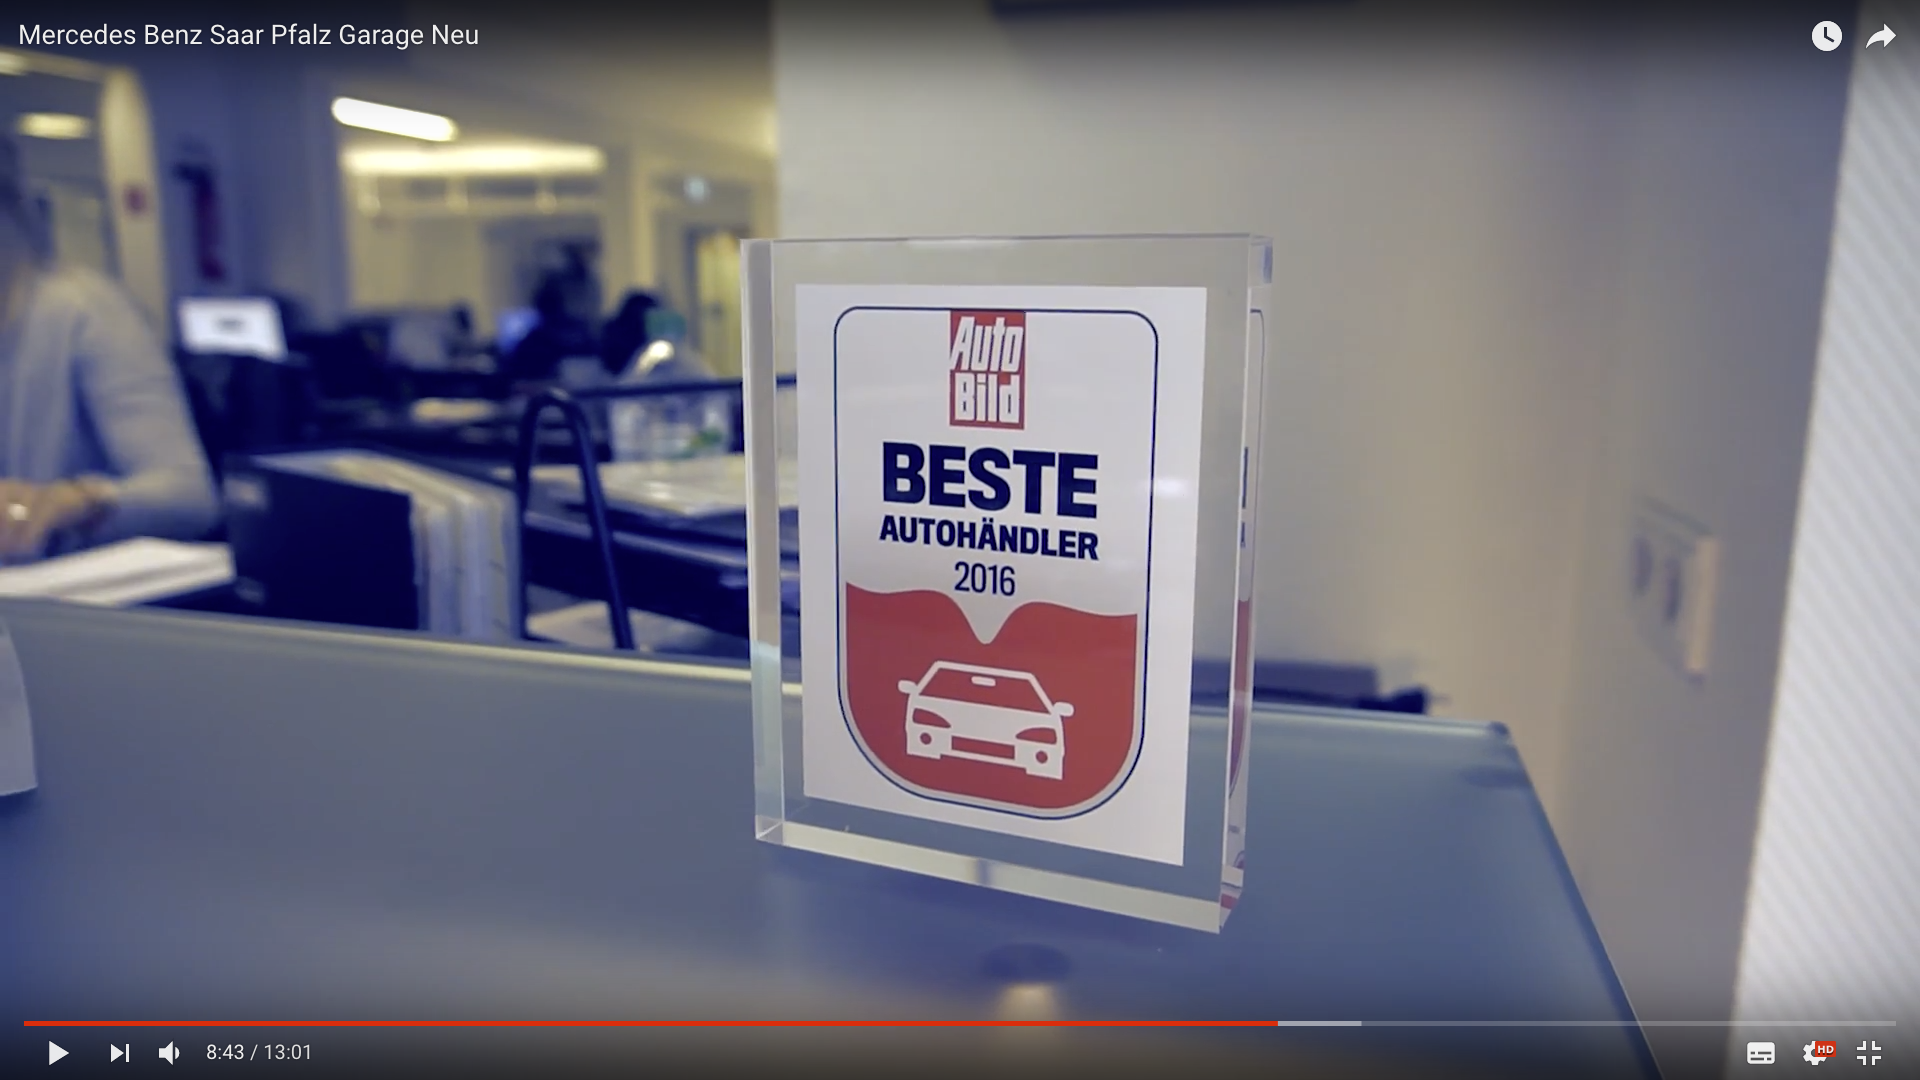 2017 Mercedes Benz Saar Pfalz Garage Neu Beste Autohändler 2016_MSM_MEDIEN_SAAR_MOSEL_SAARLAND_FERNSEHEN_1_ED_SAAR